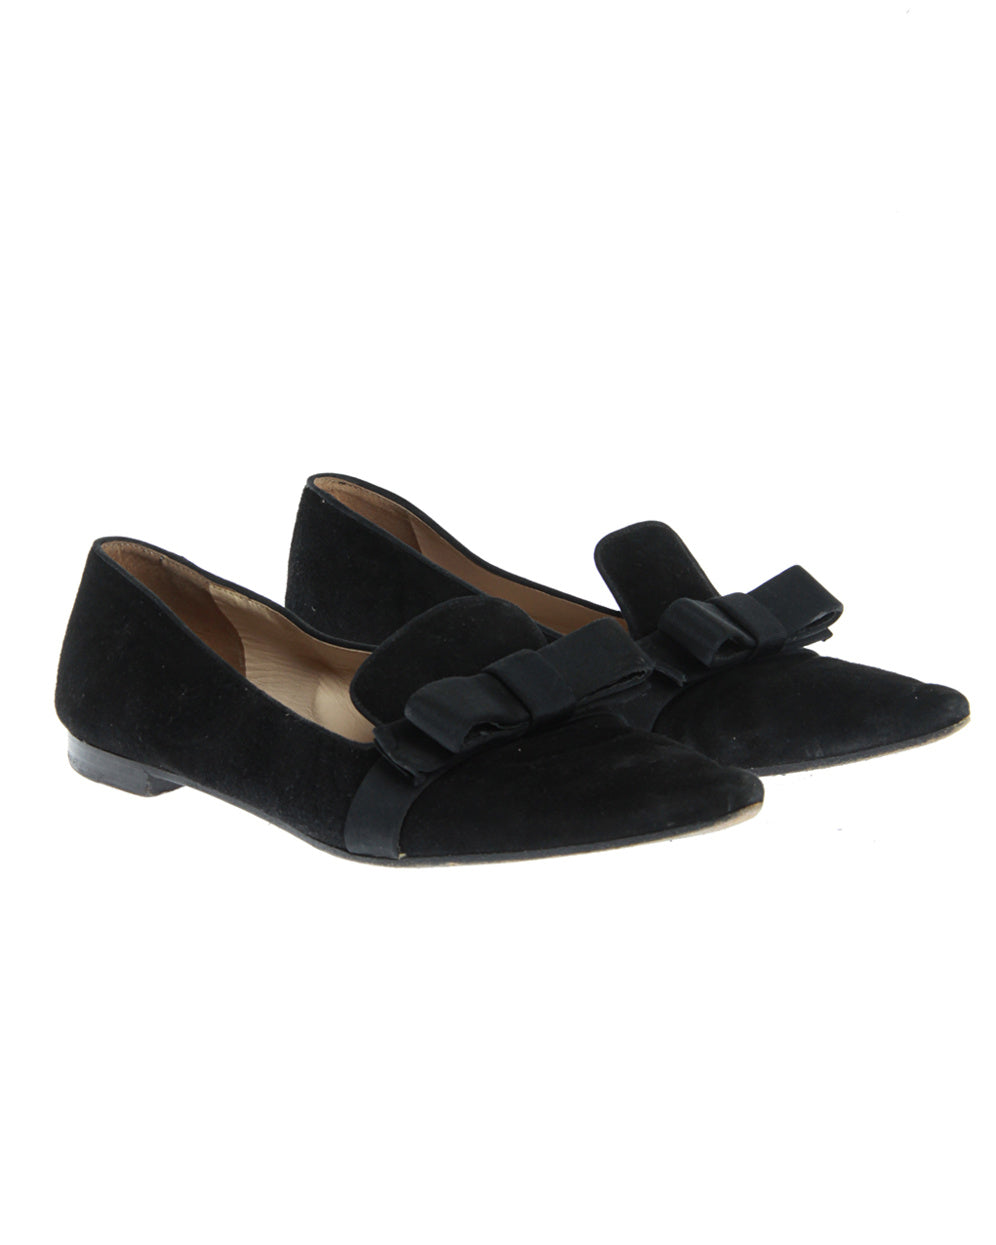 Prada Black Suede Flat Shoes - UK 4